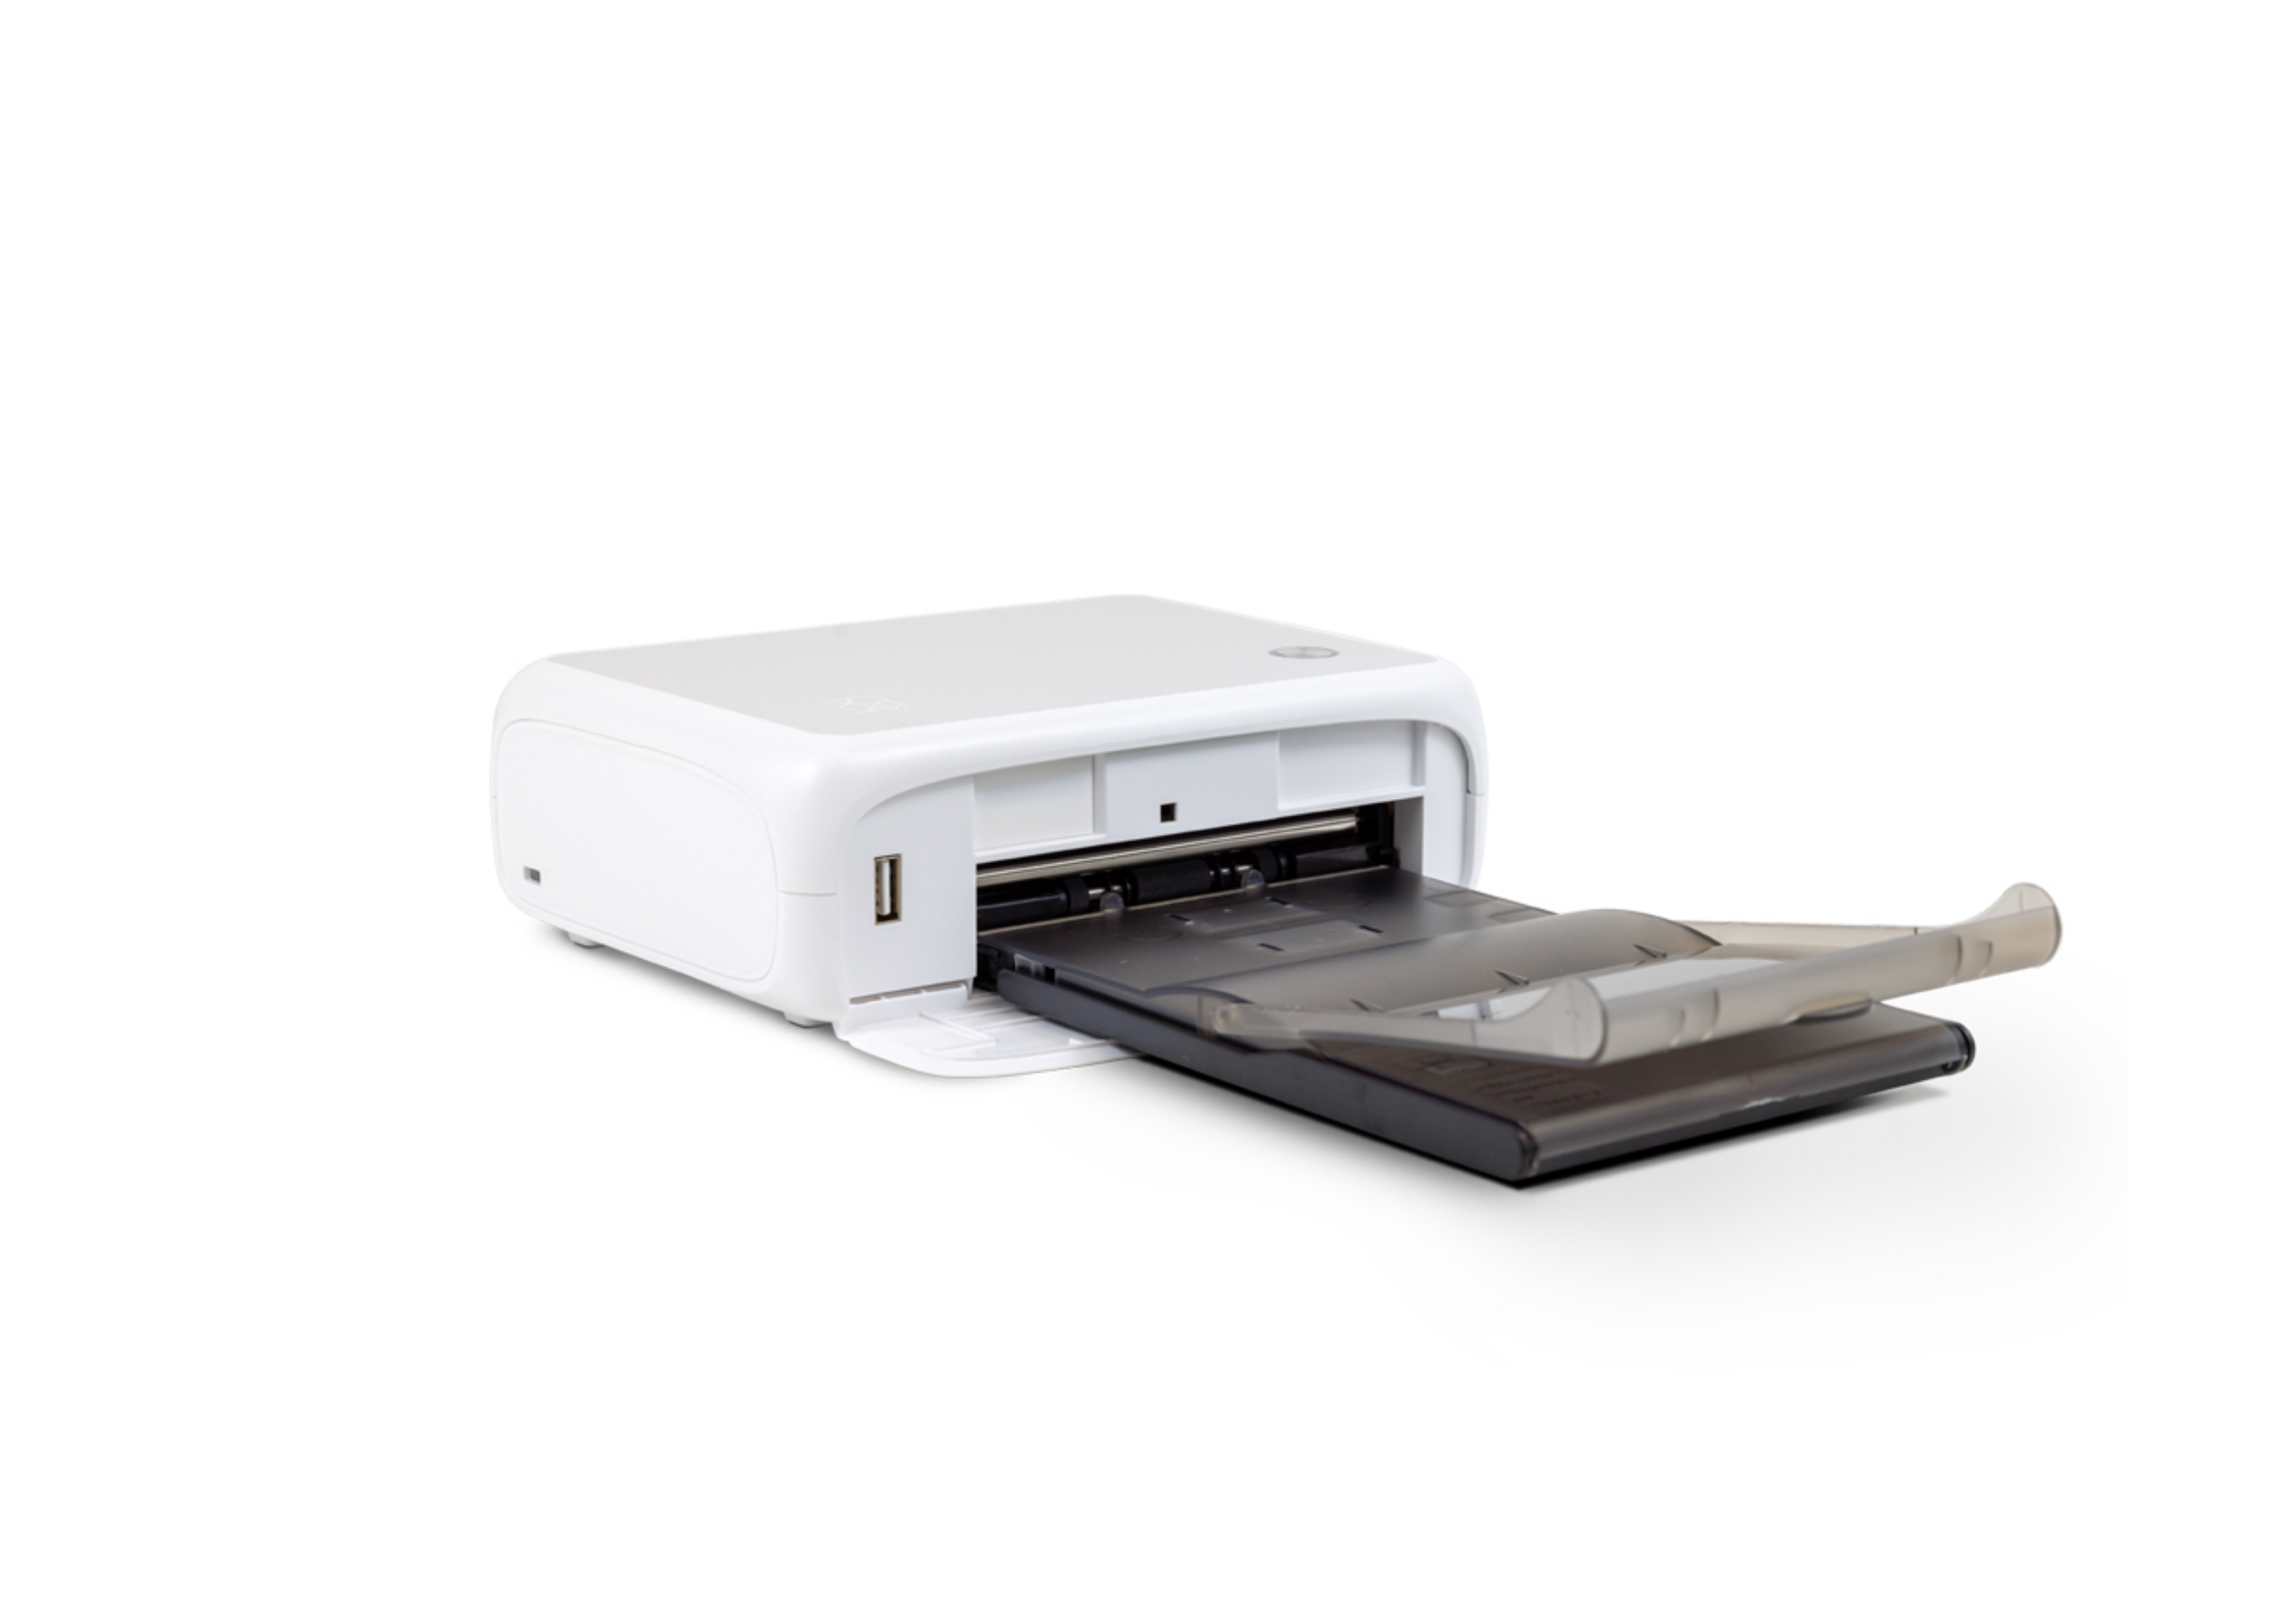 goofoo Compact Photo Printer